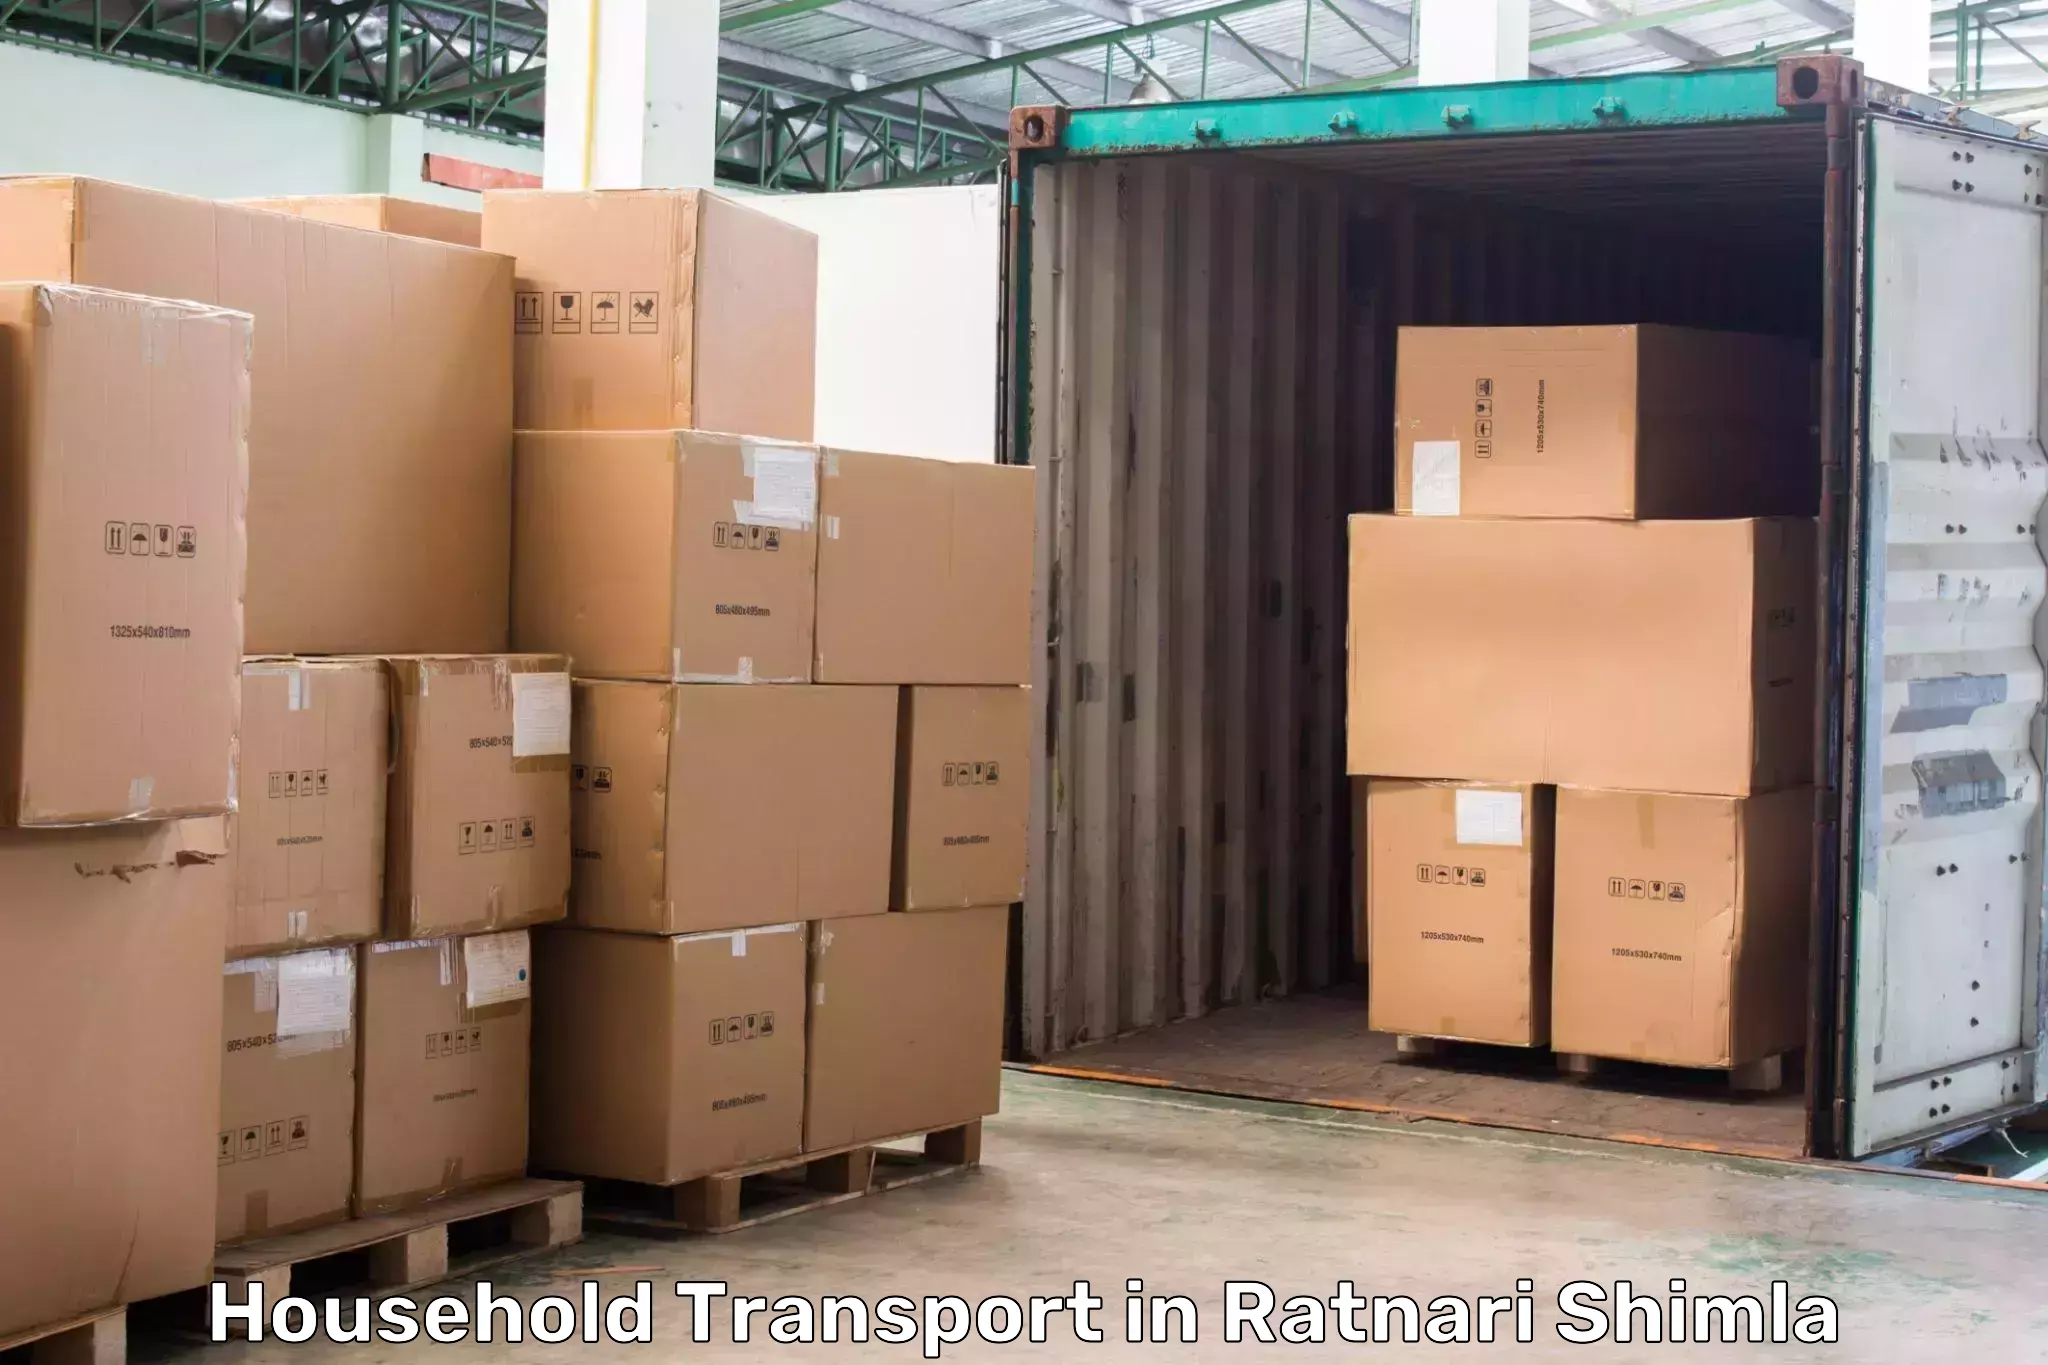 Household goods transporters in Ratnari Shimla